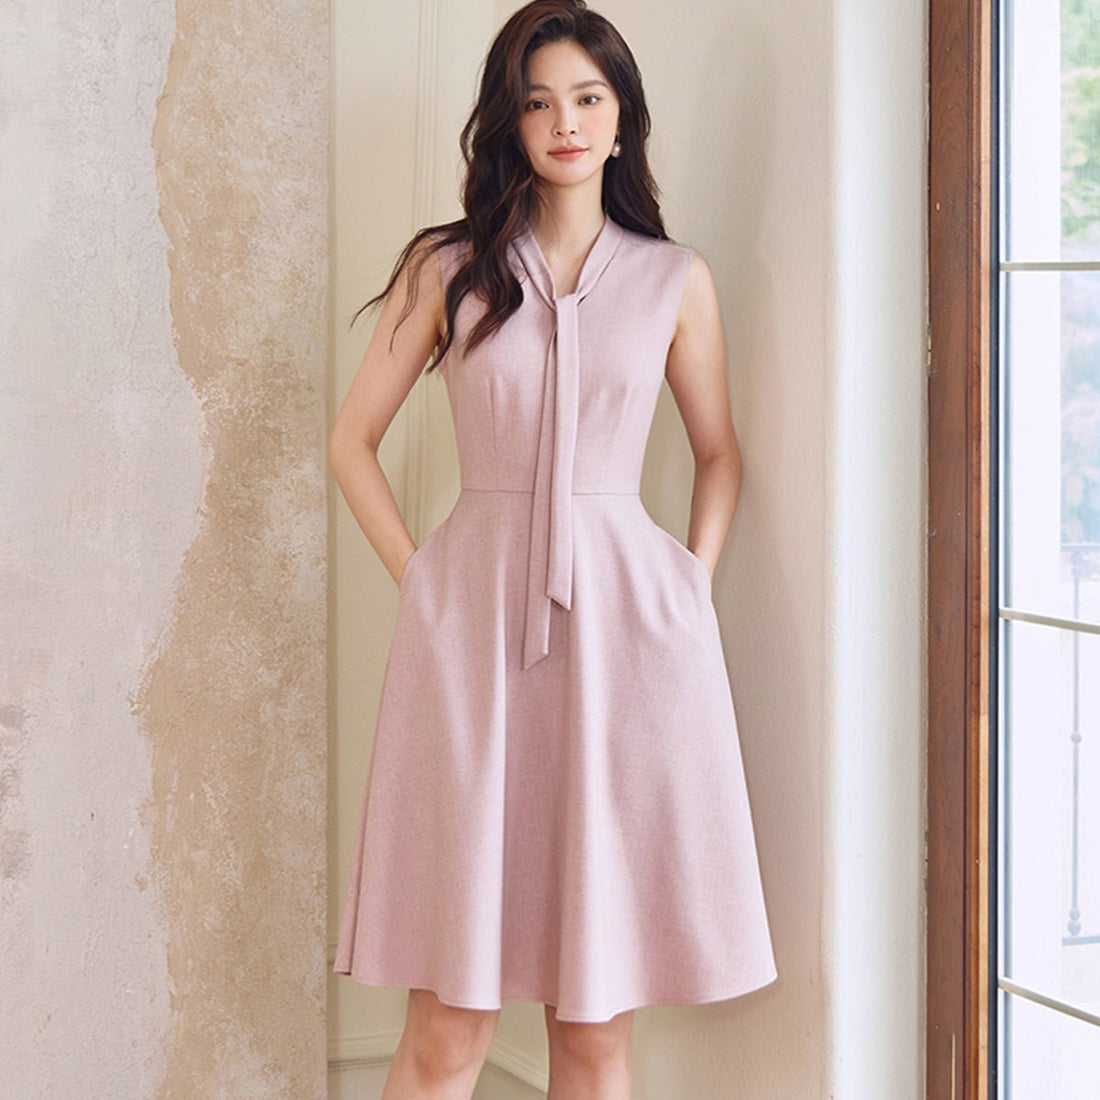 Sleeveless Pink Modern Fashion Dress - 0cm